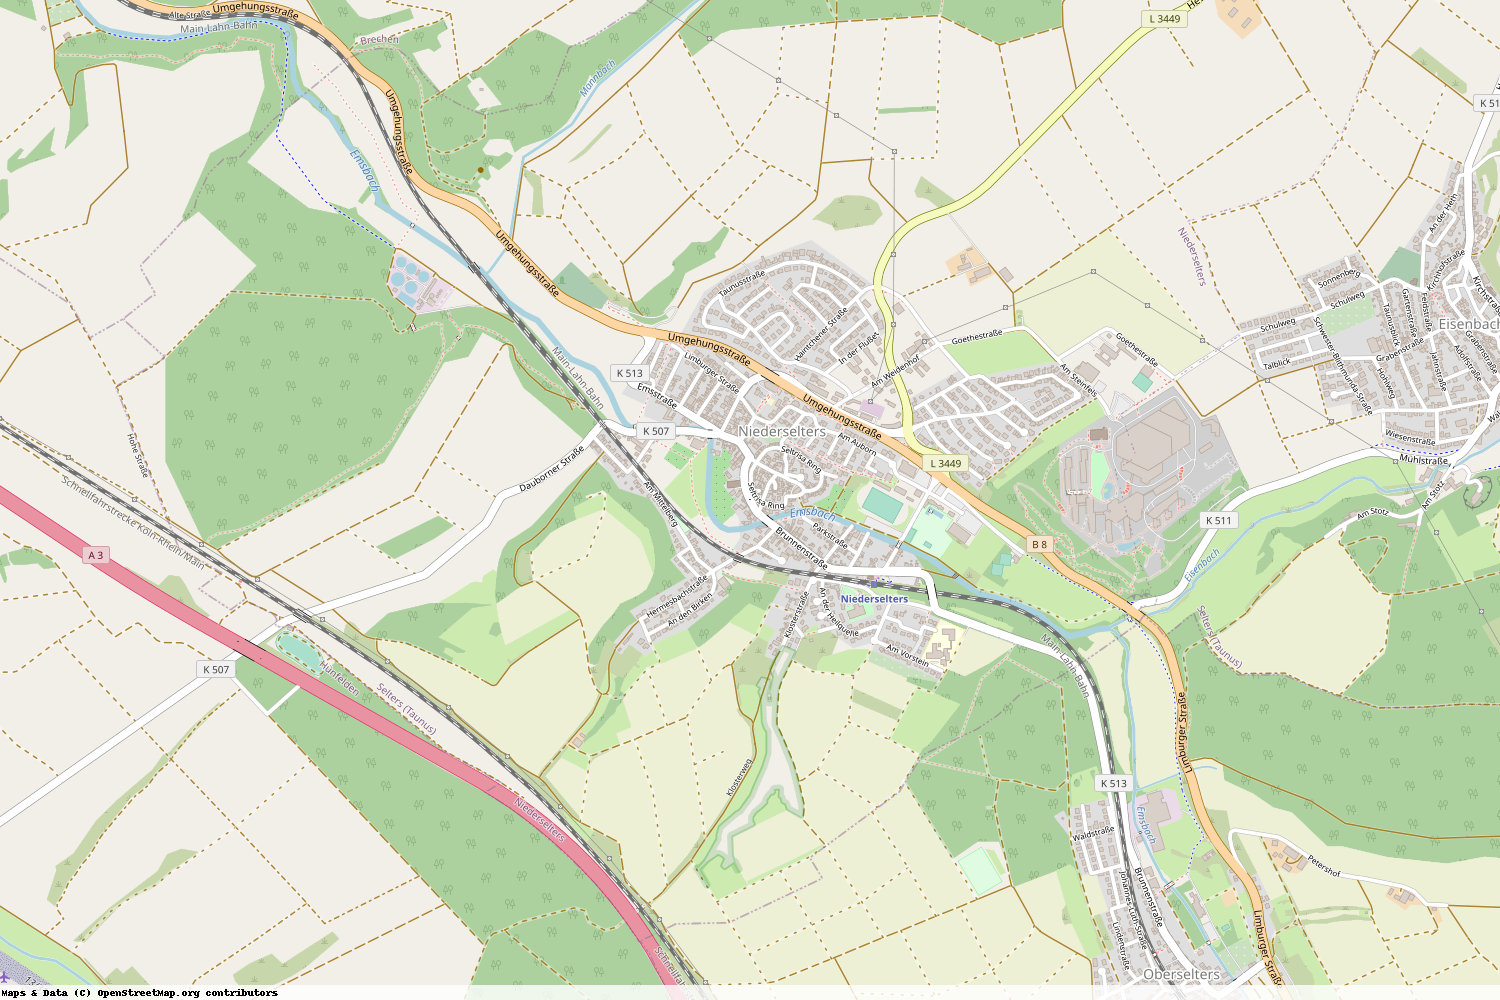 Ist gerade Stromausfall in Hessen - Limburg-Weilburg - Selters (Taunus)?